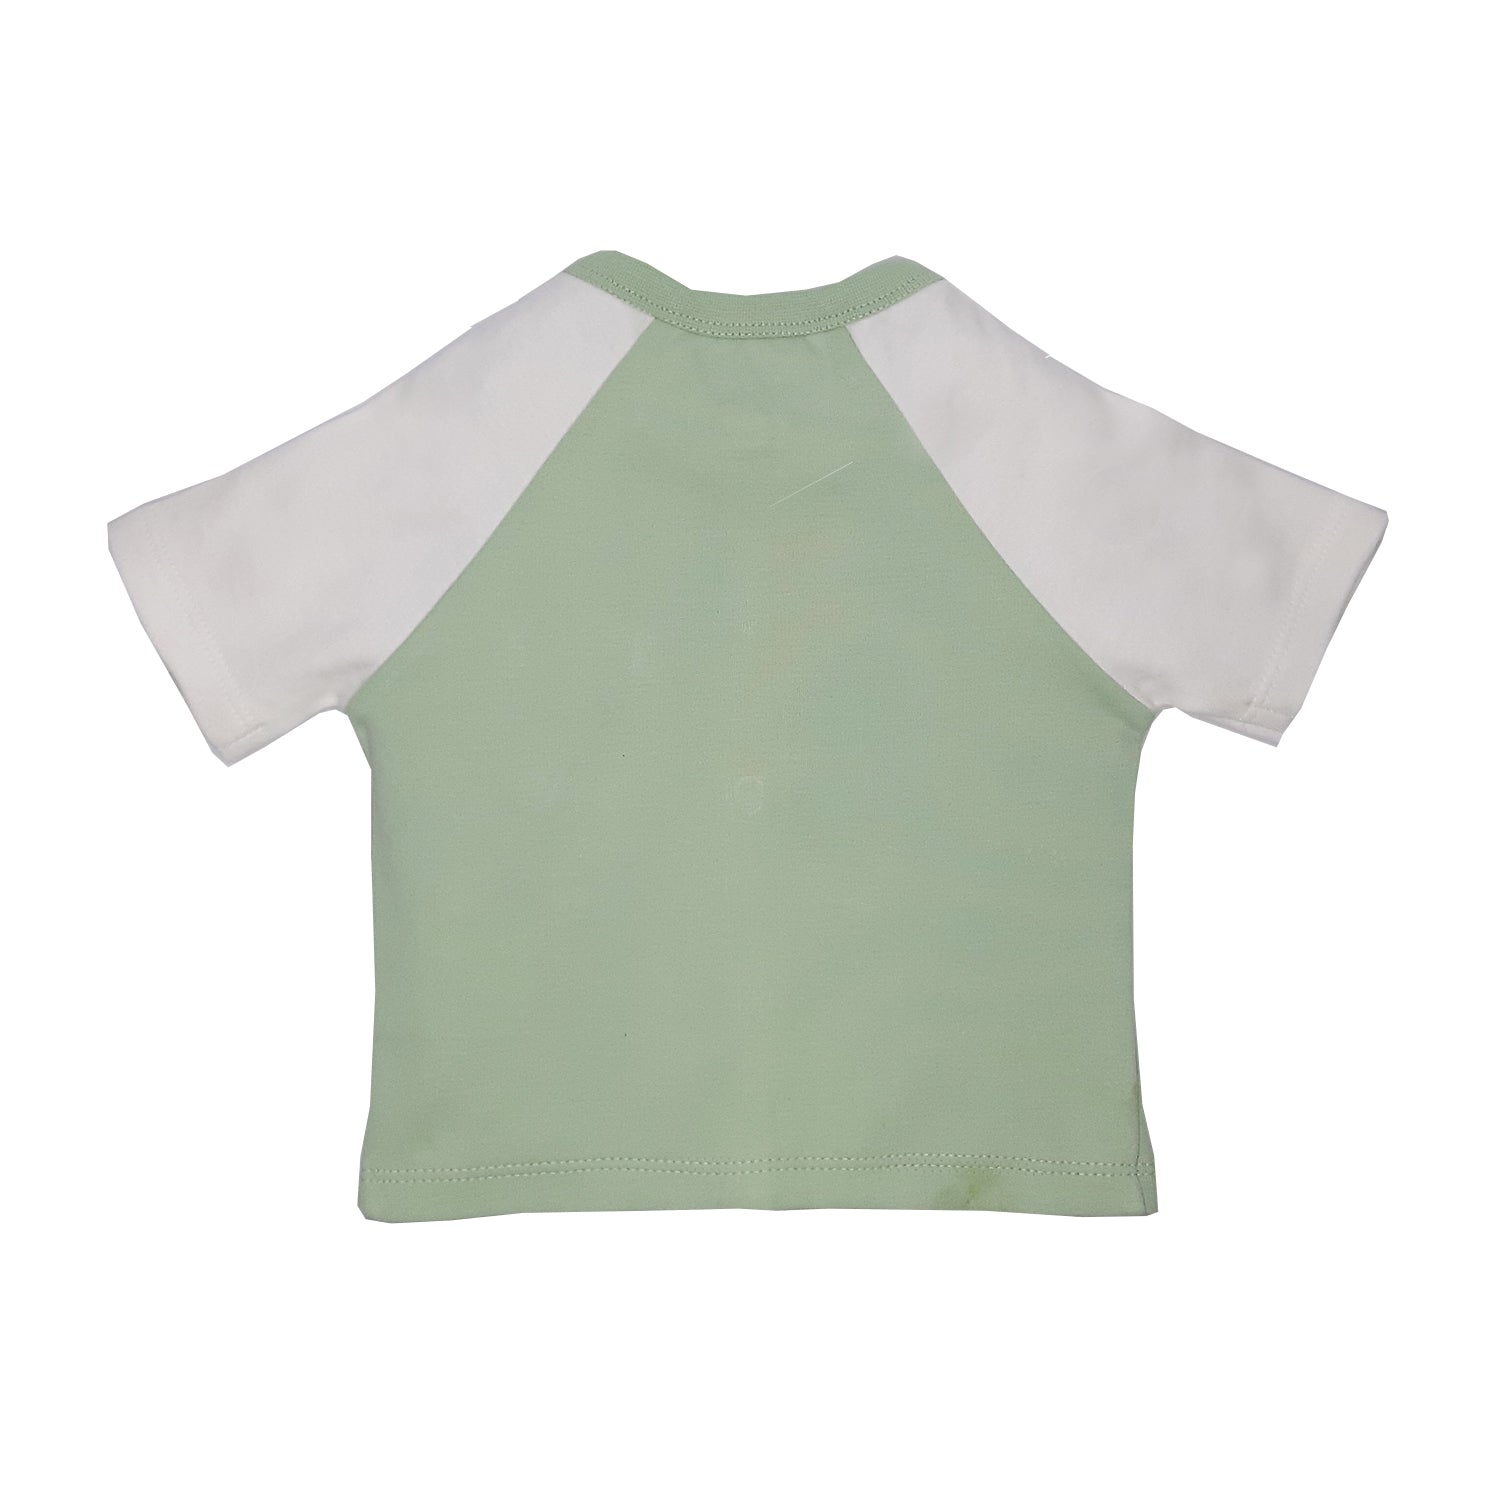 My Milestones T-shirt Half Sleeves Boys Sage Green/ Navy Blue -2 Pc Pack